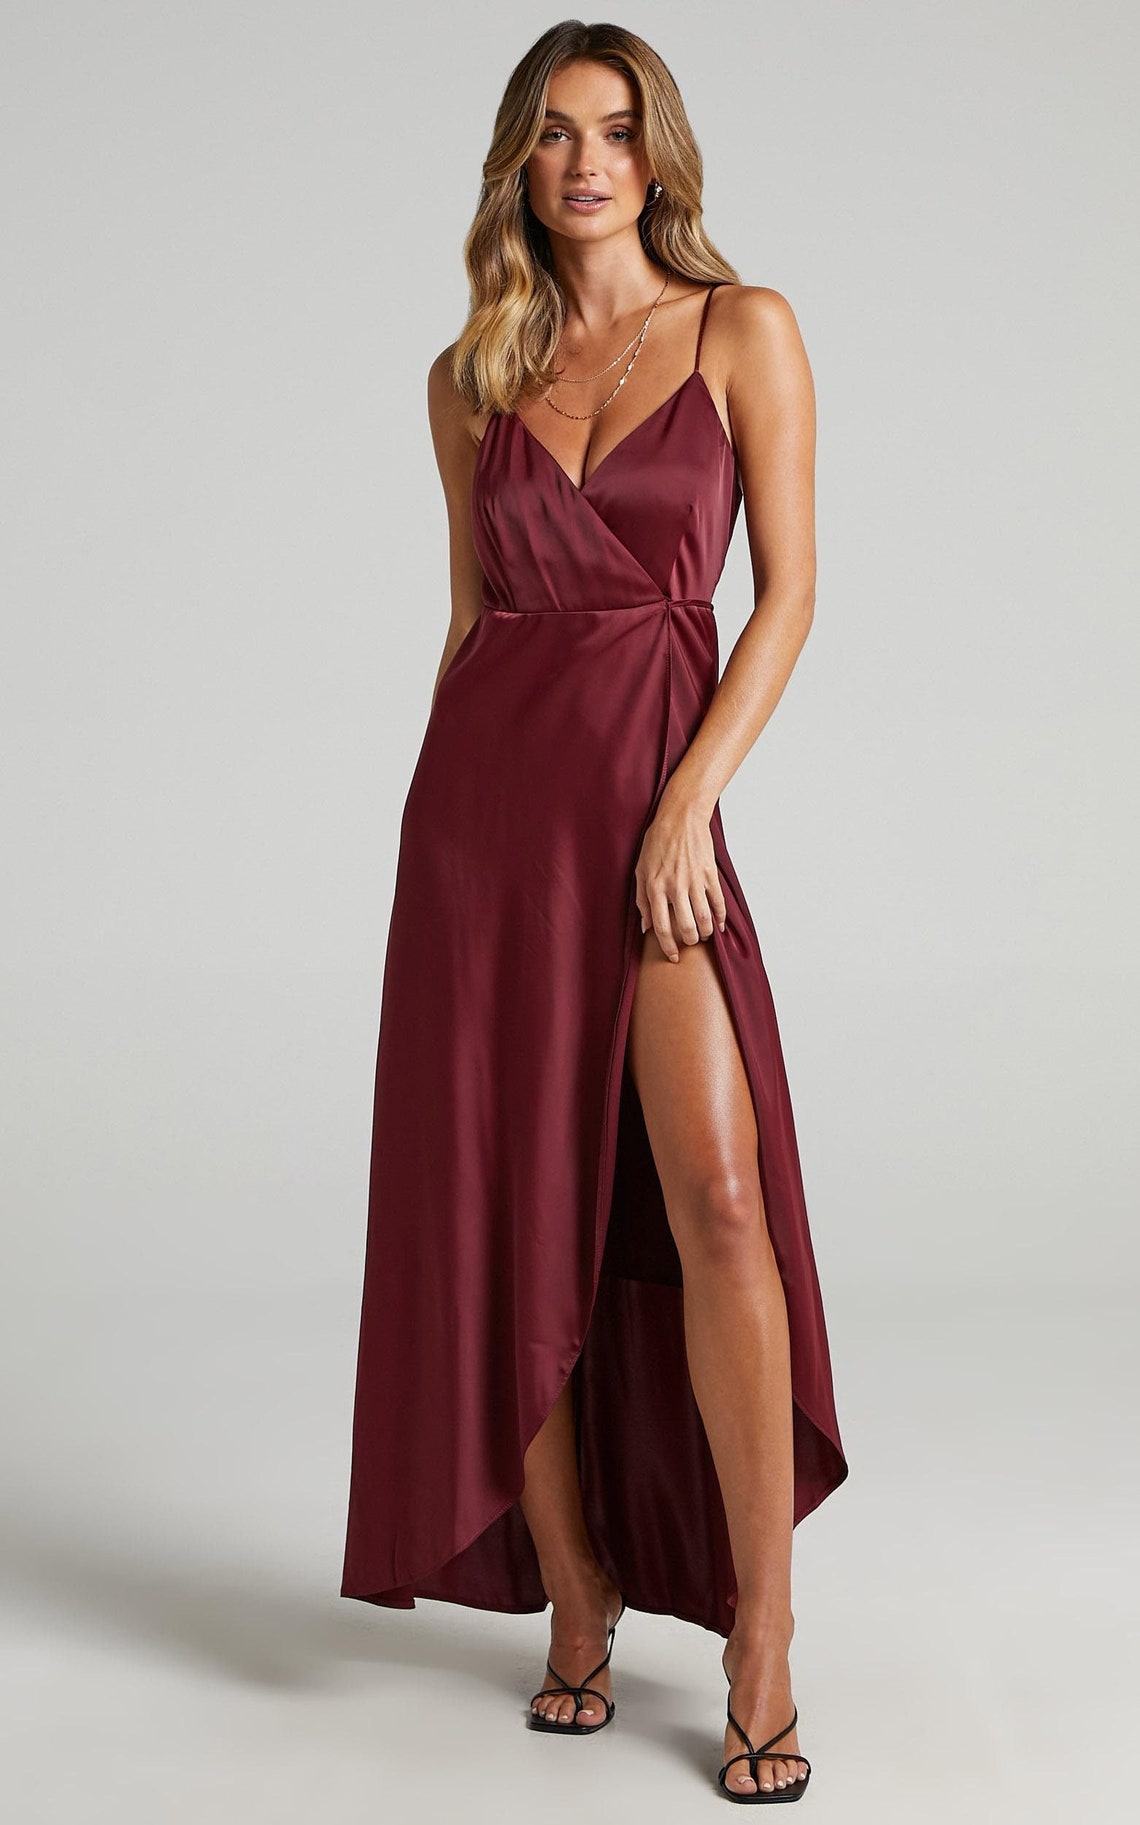 Burgundy silk satin bridesmaid dress Dark red long asymmetric image 1